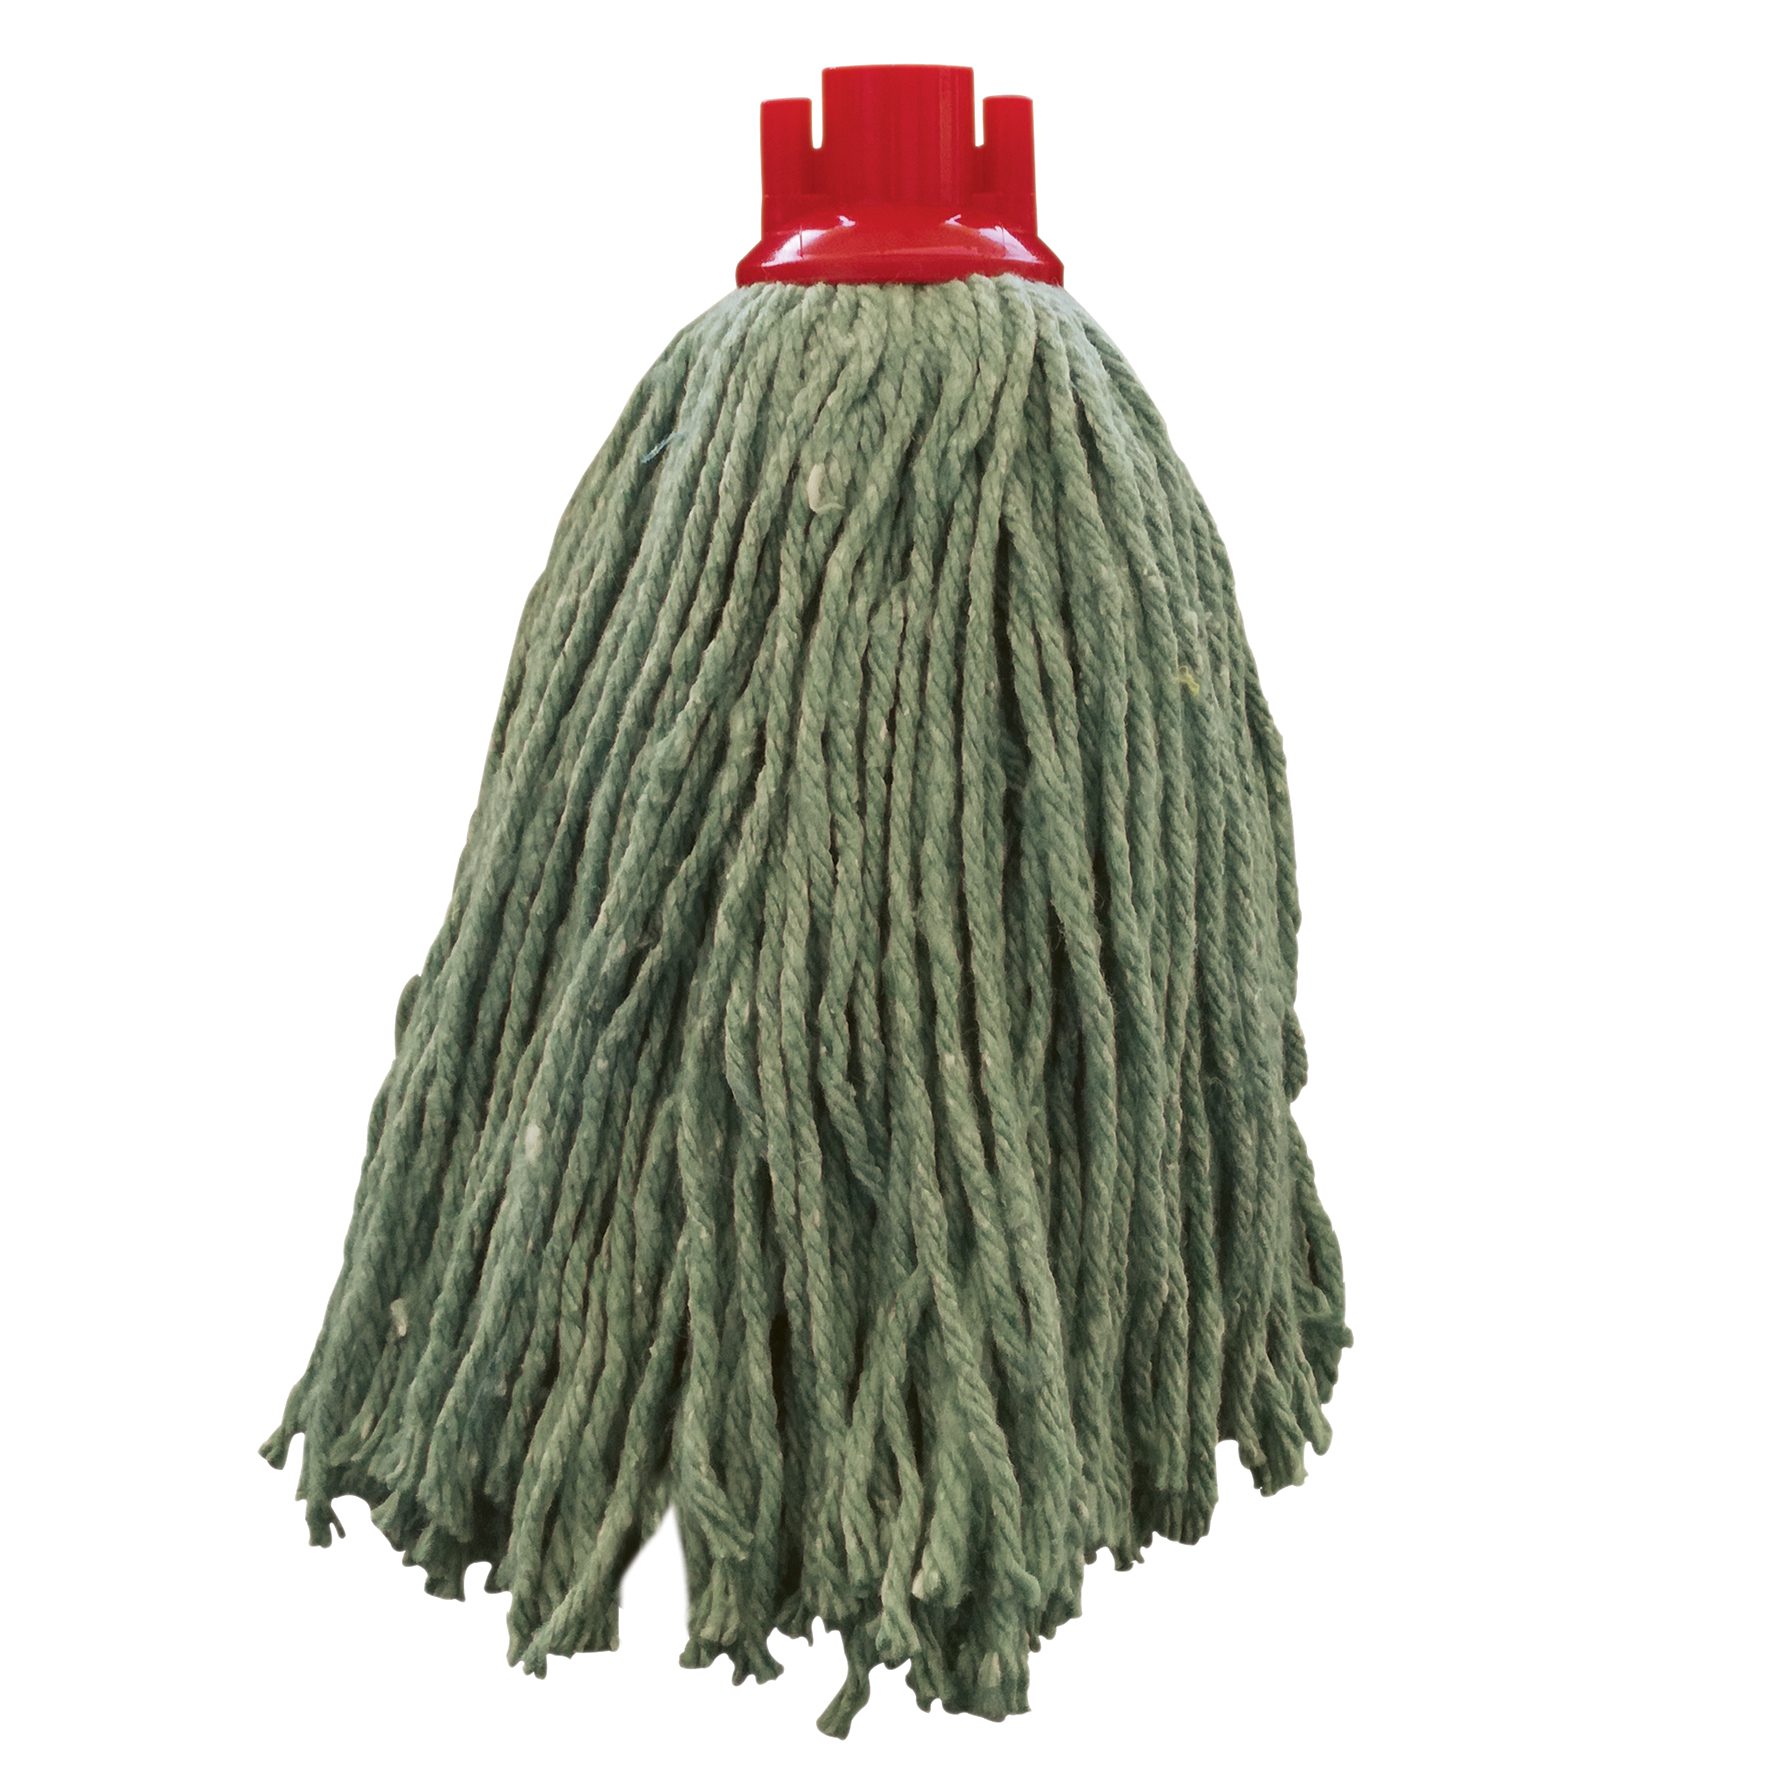 Household cotton yarn mop “Canada” green colour